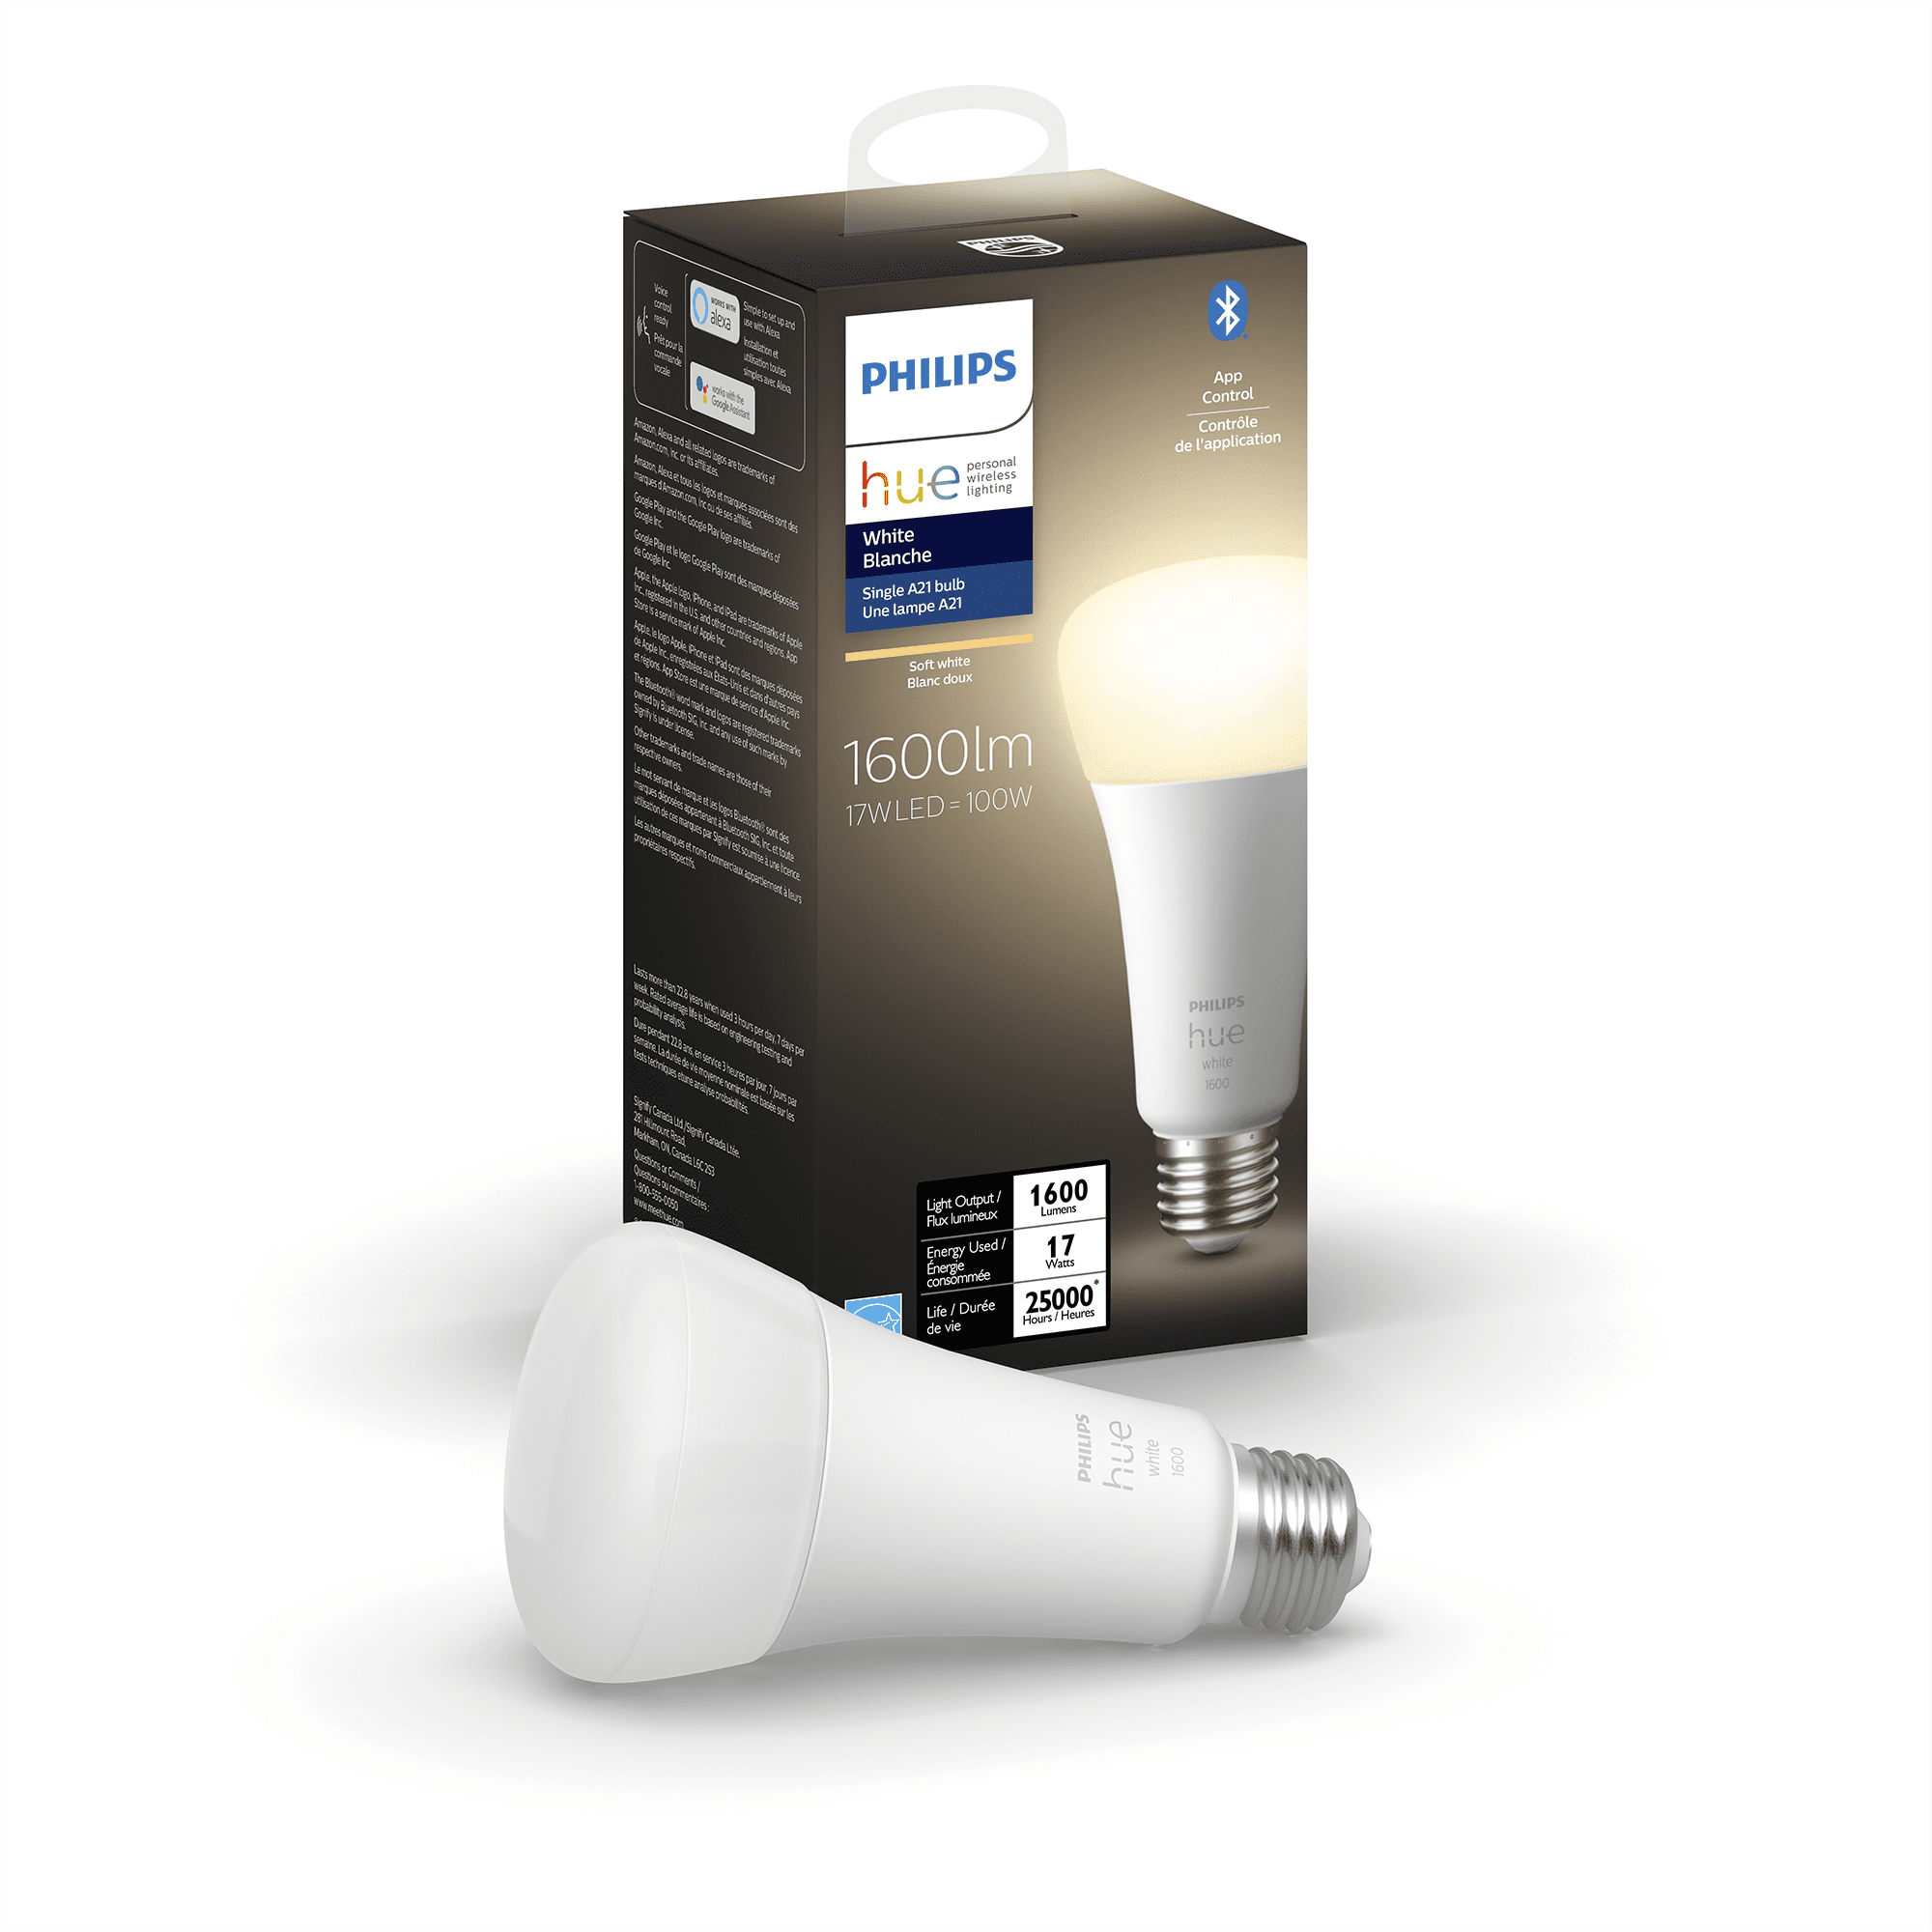 Philips Hue 100W A21 Smart Bulb - Walmart.com